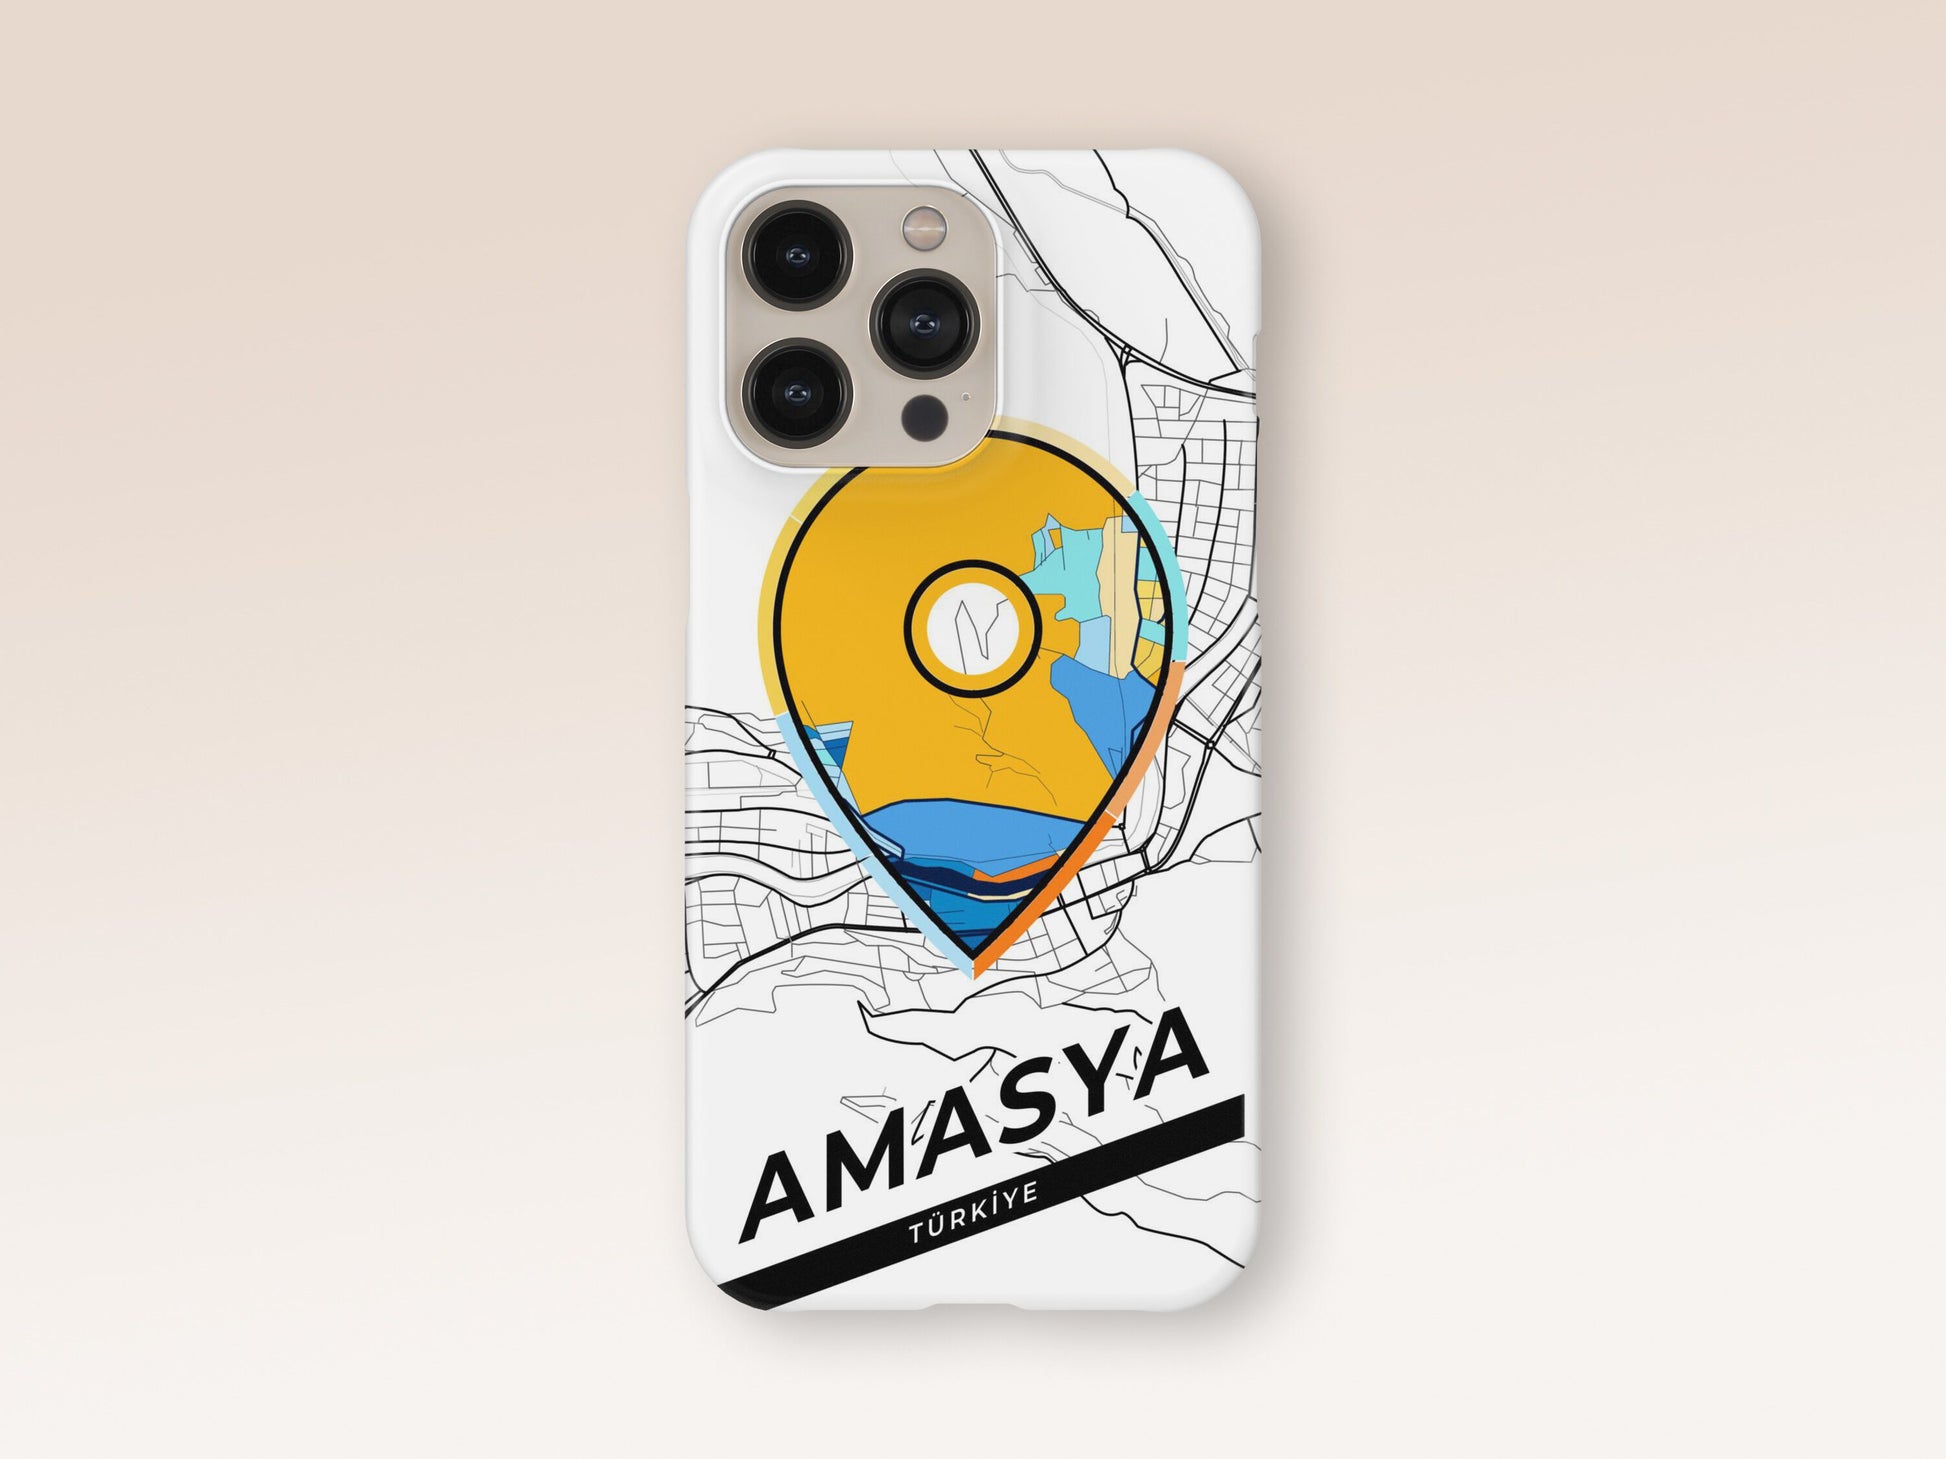 Amasya Turkey slim phone case with colorful icon. Birthday, wedding or housewarming gift. Couple match cases. 1